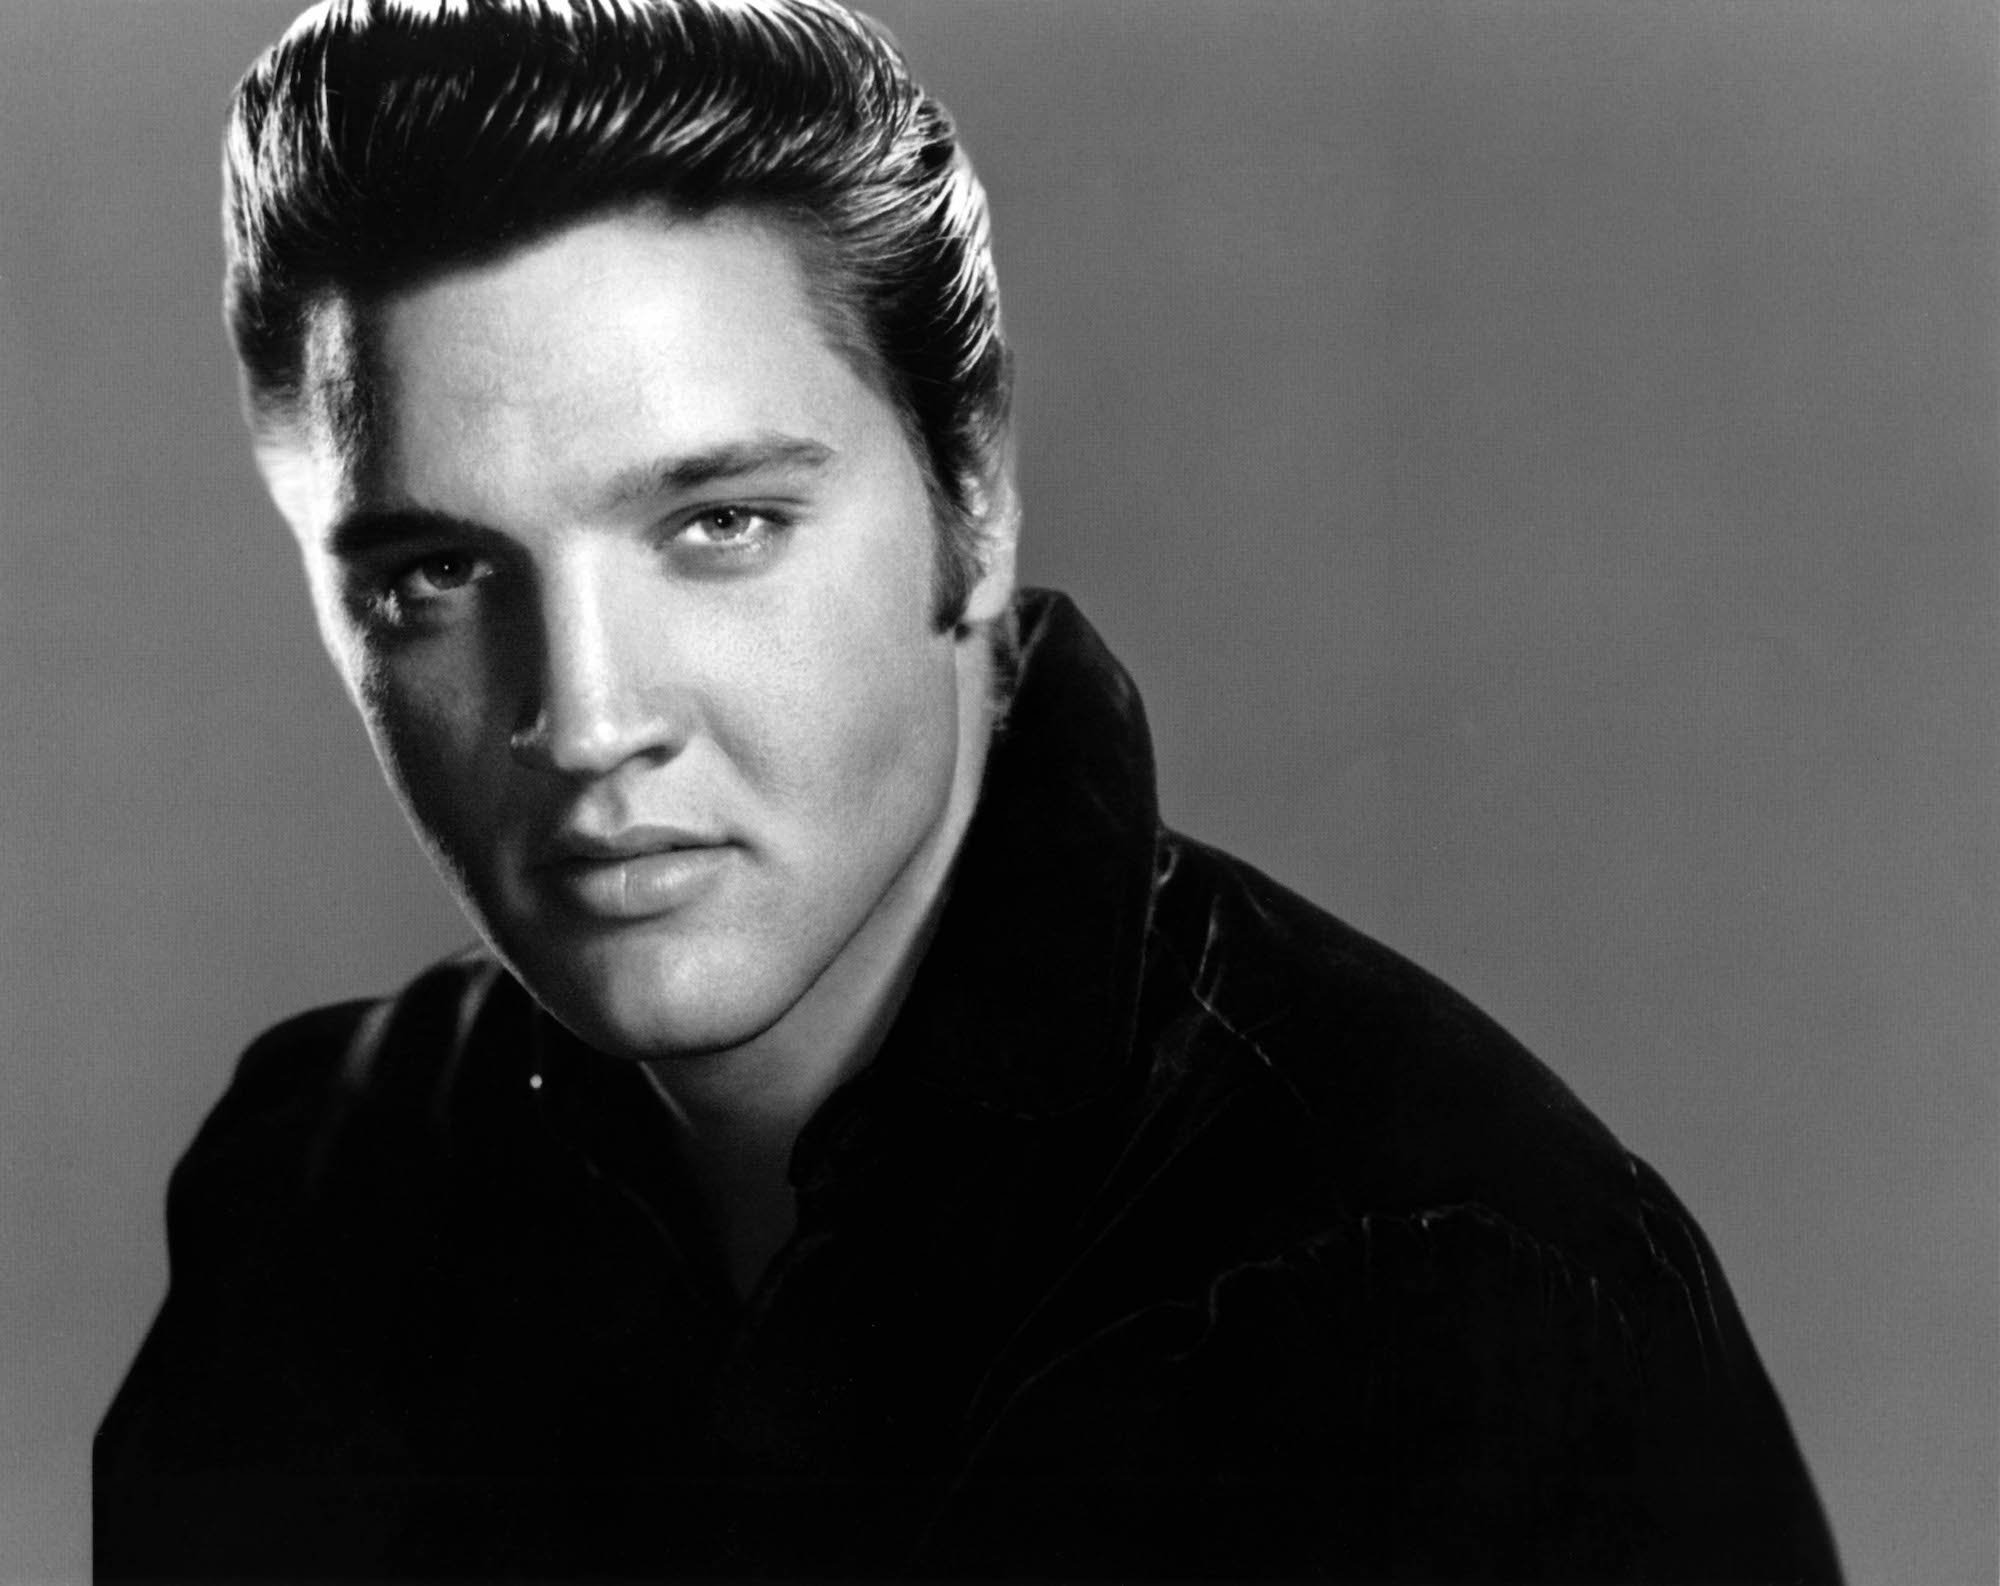 Elvis Presley smiling, in black and white